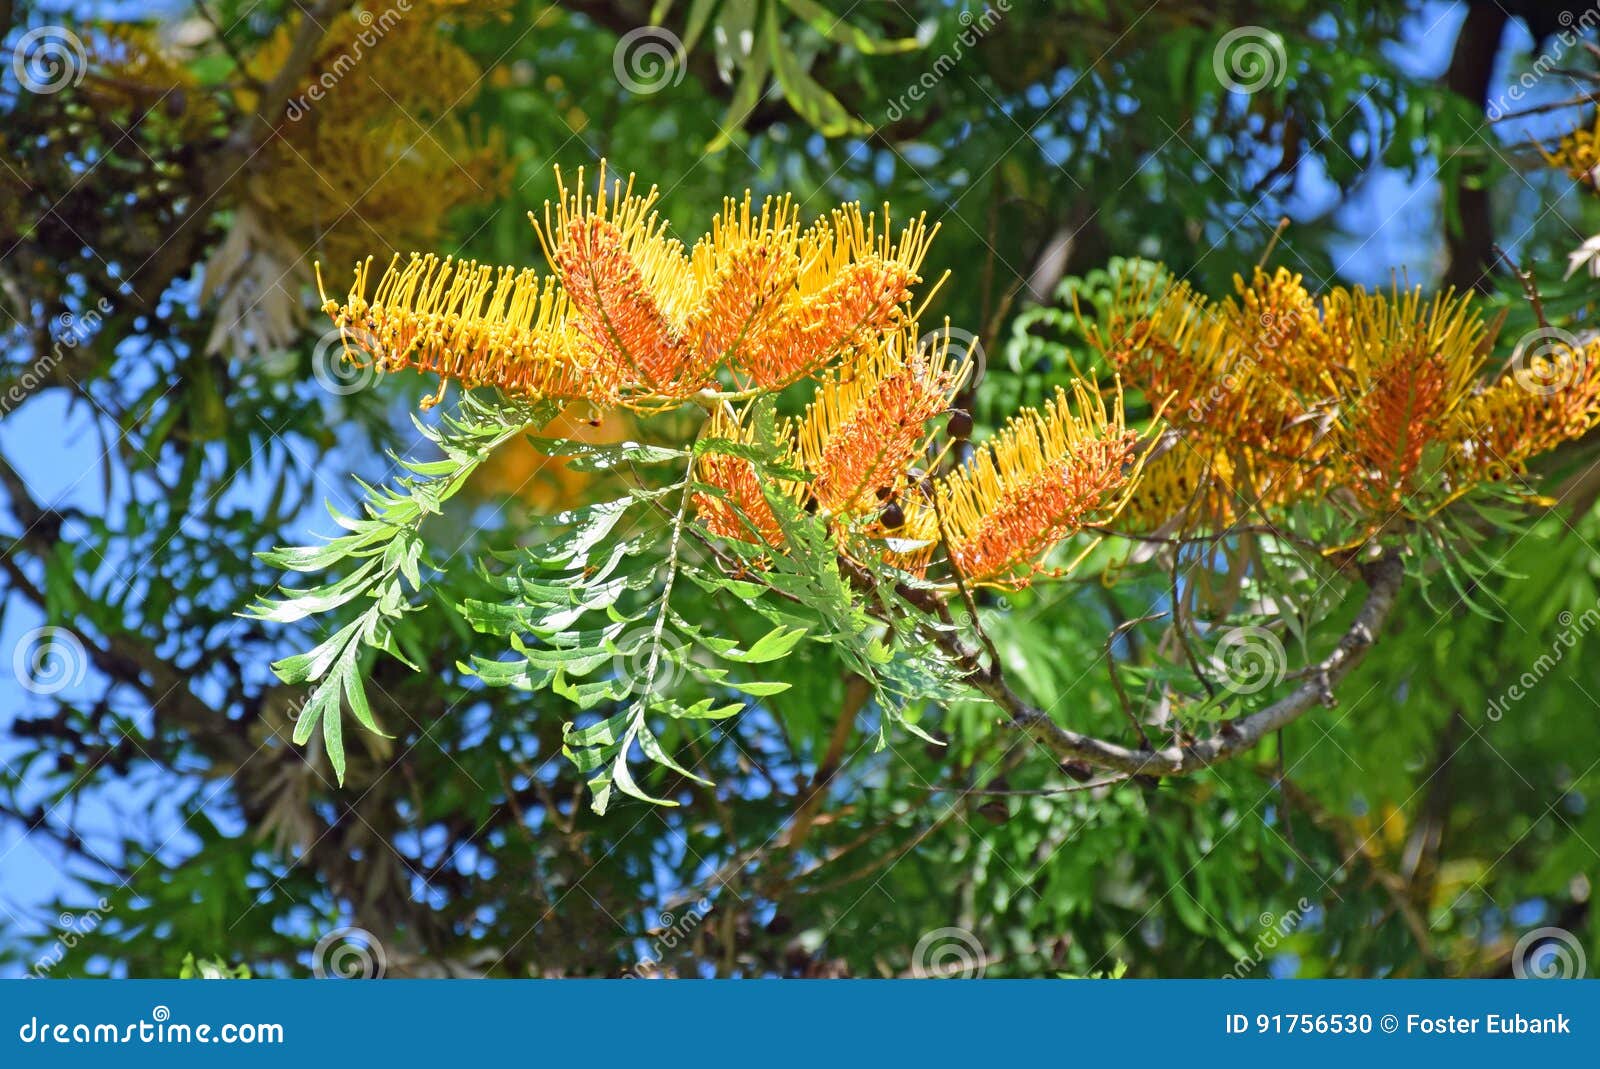 flowers of a silk oak tree or grevillea robusta in laguna woods,caifornia.